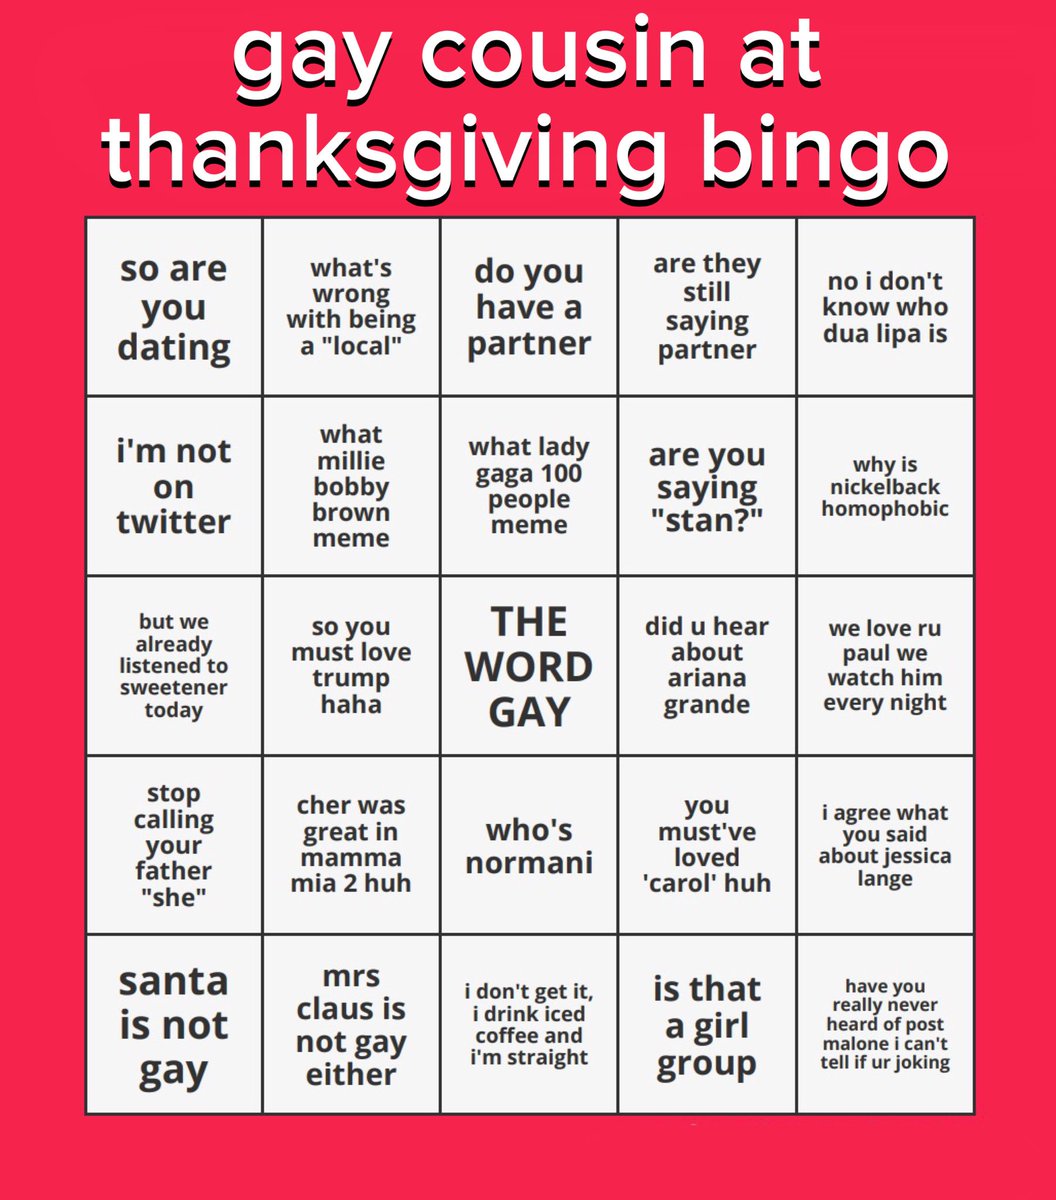 8 replies. it’s 'gay cousin at thanksgiving bingo' baby. check &a...